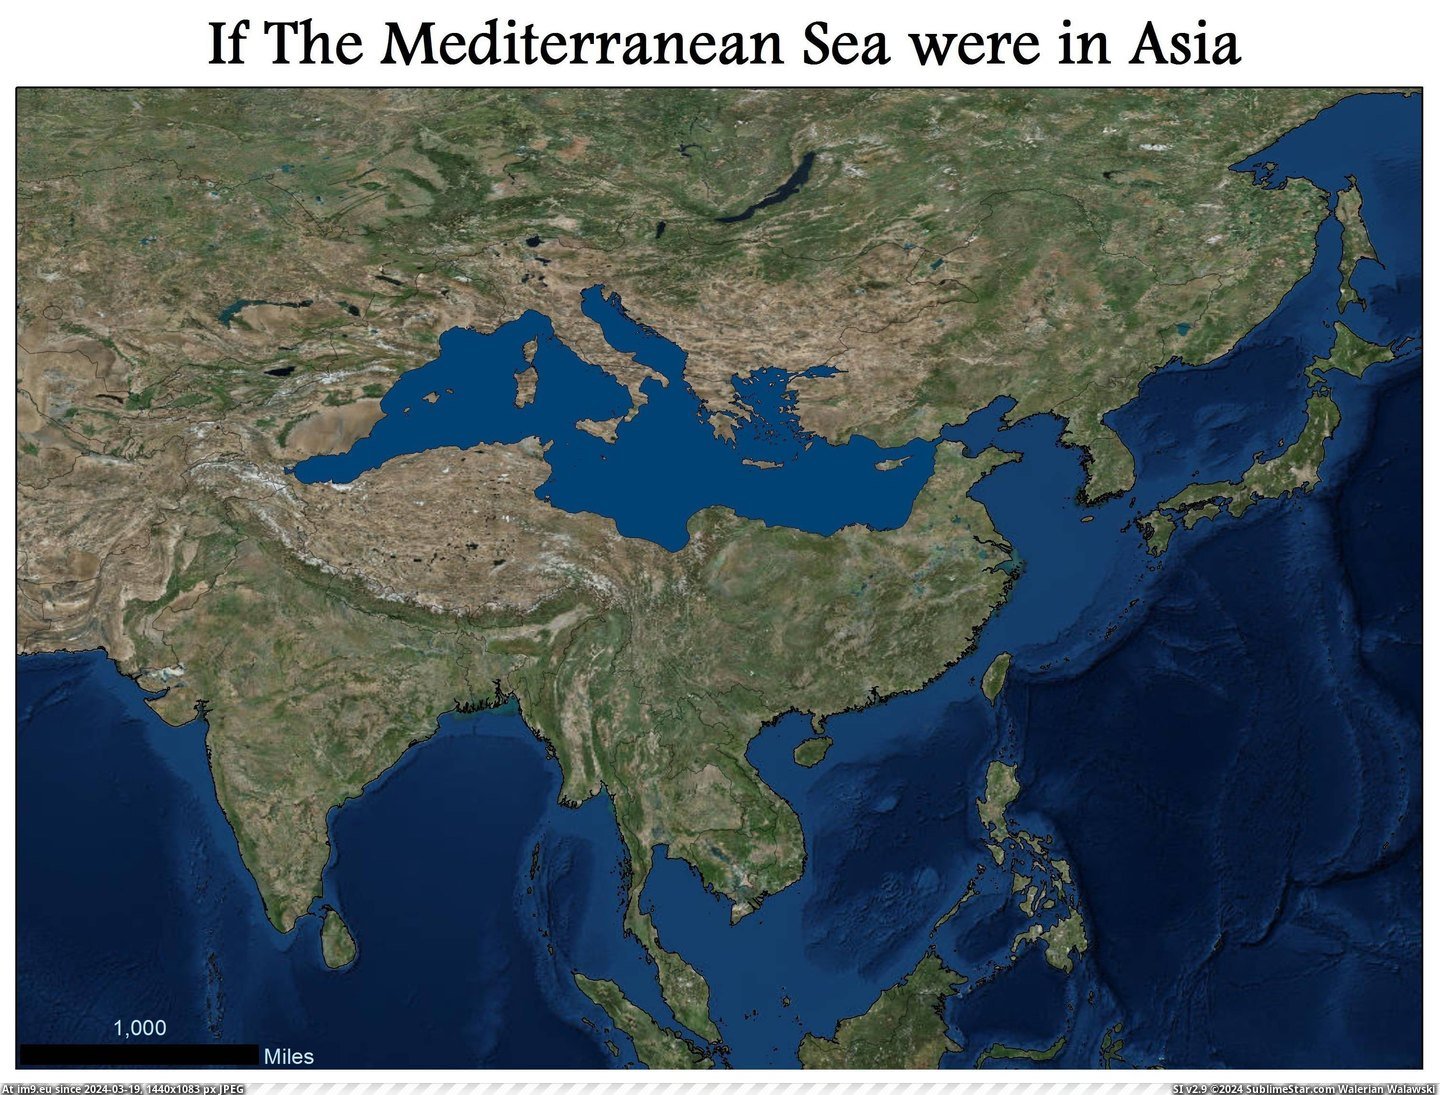 #Sea #Mediterranean #Asia [Mapporn] If the Mediterranean Sea were in Asia [3014x2279] Pic. (Image of album My r/MAPS favs))